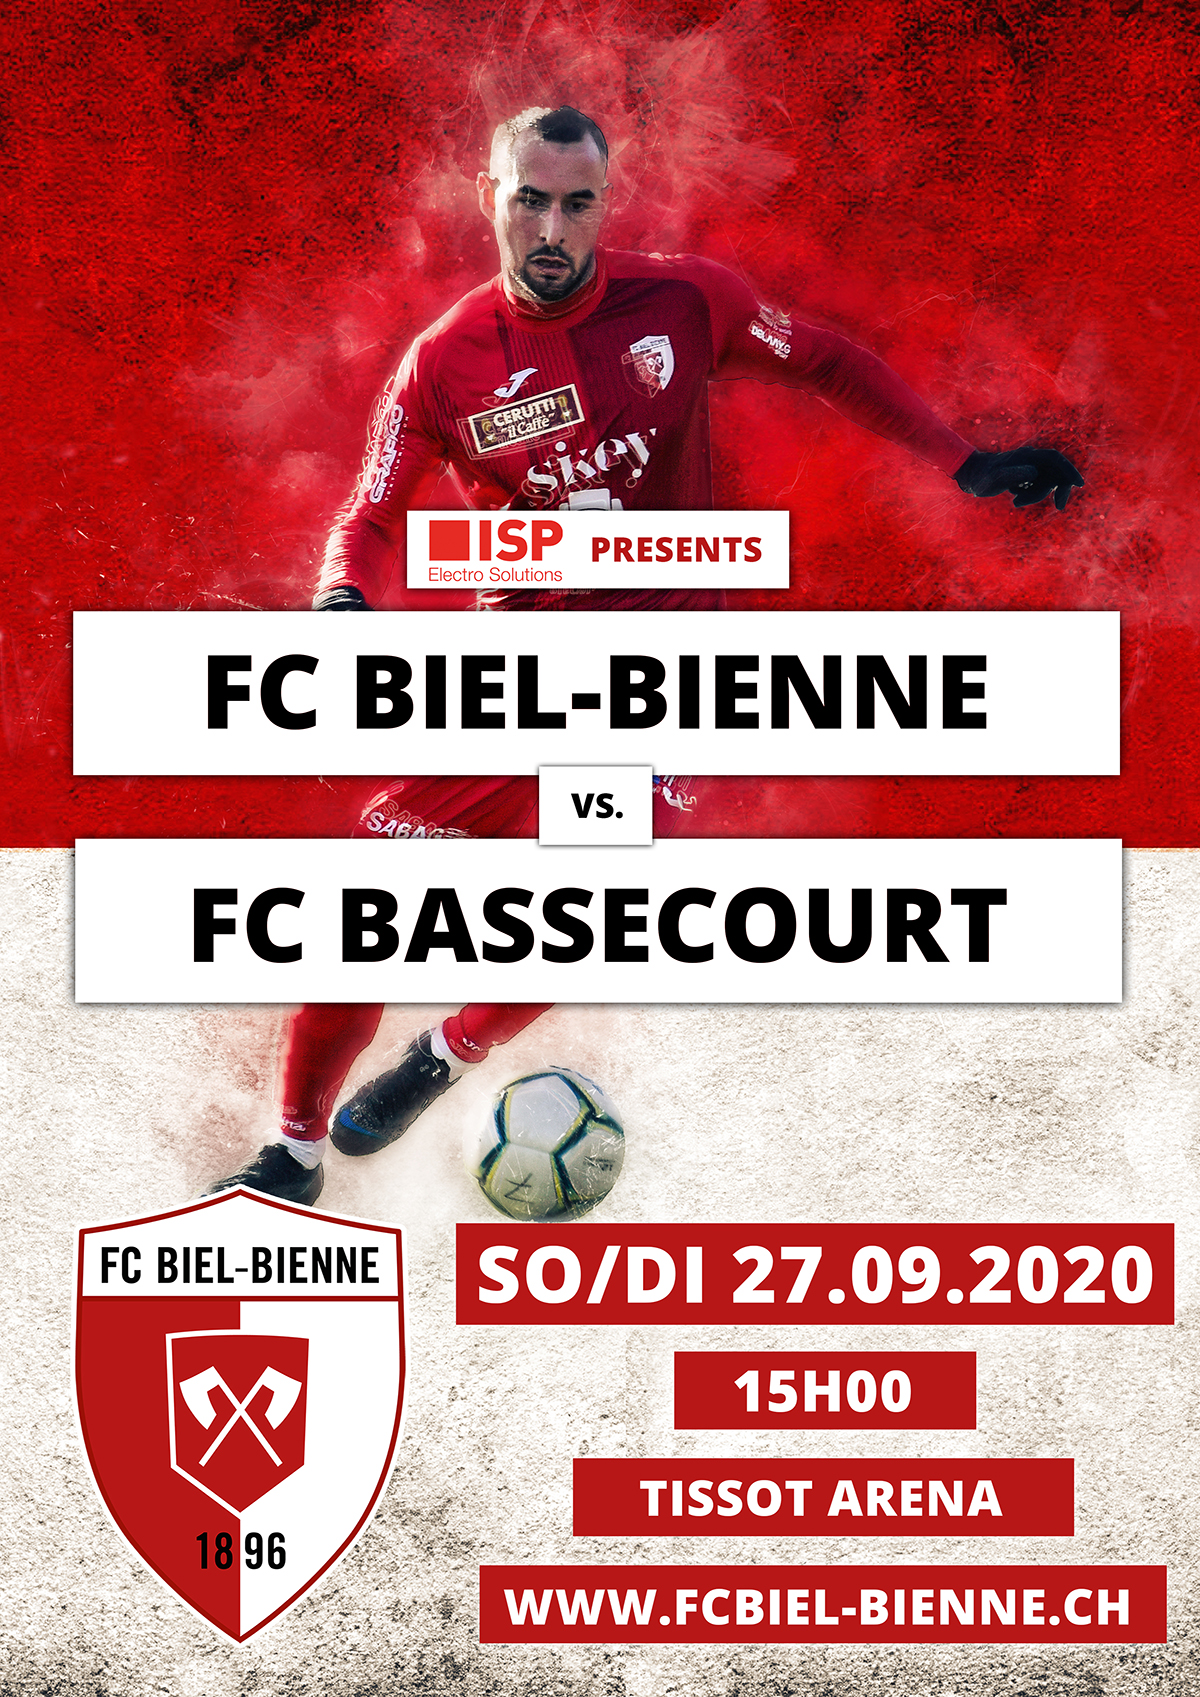 FC Biel-Bienne vs. FC Bassecourt